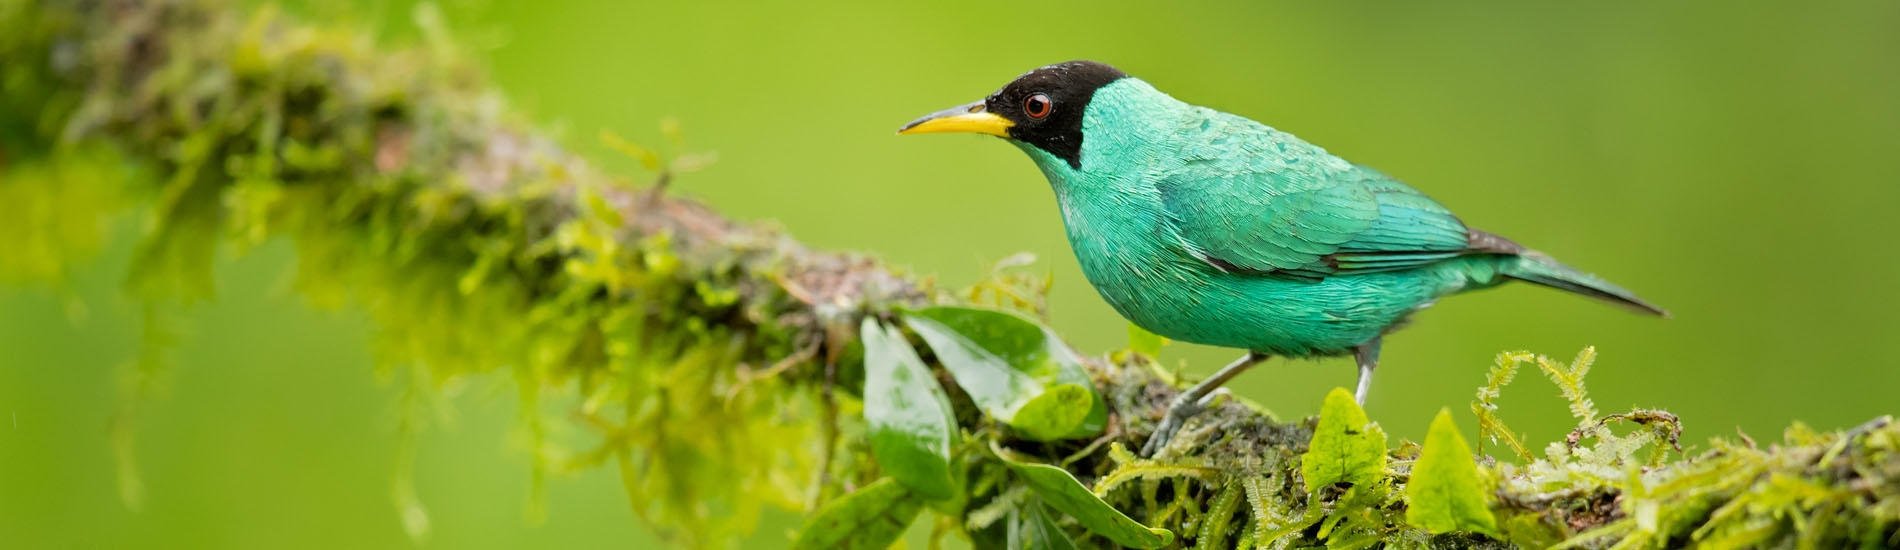 Costa Rica - Bird